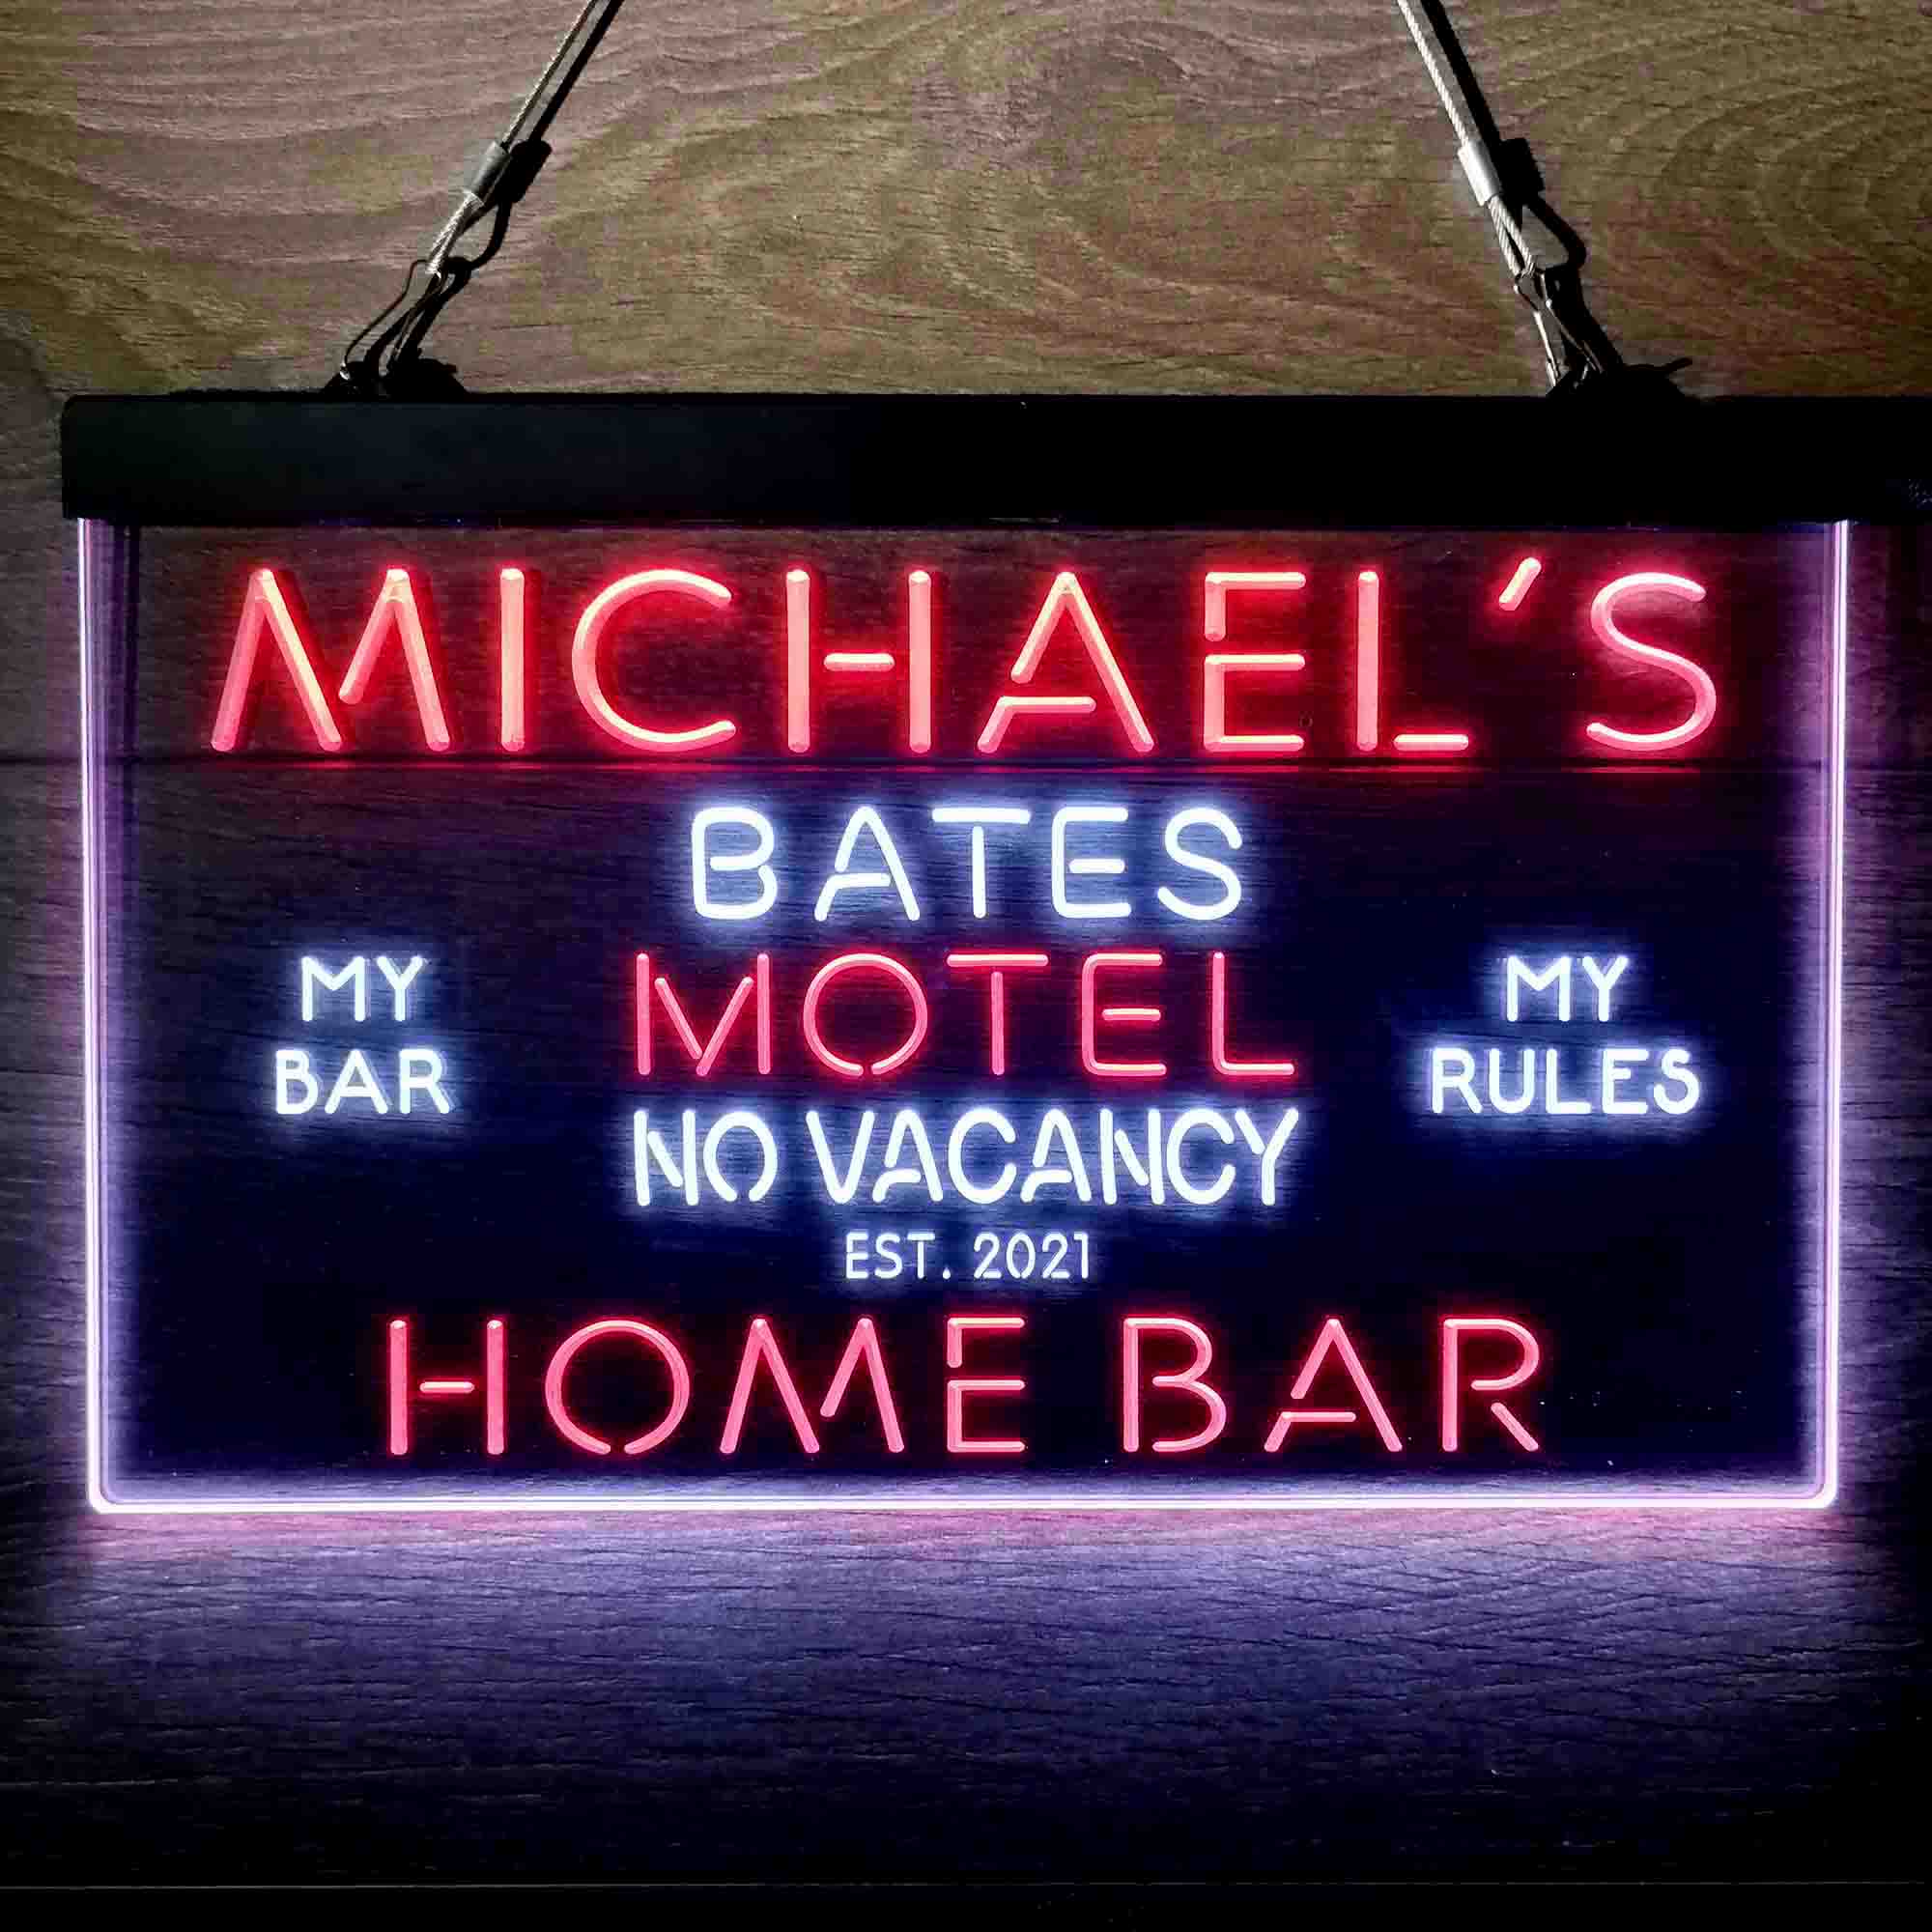 Personalized Bates Motel No Vacancy Neon-Like LED Sign